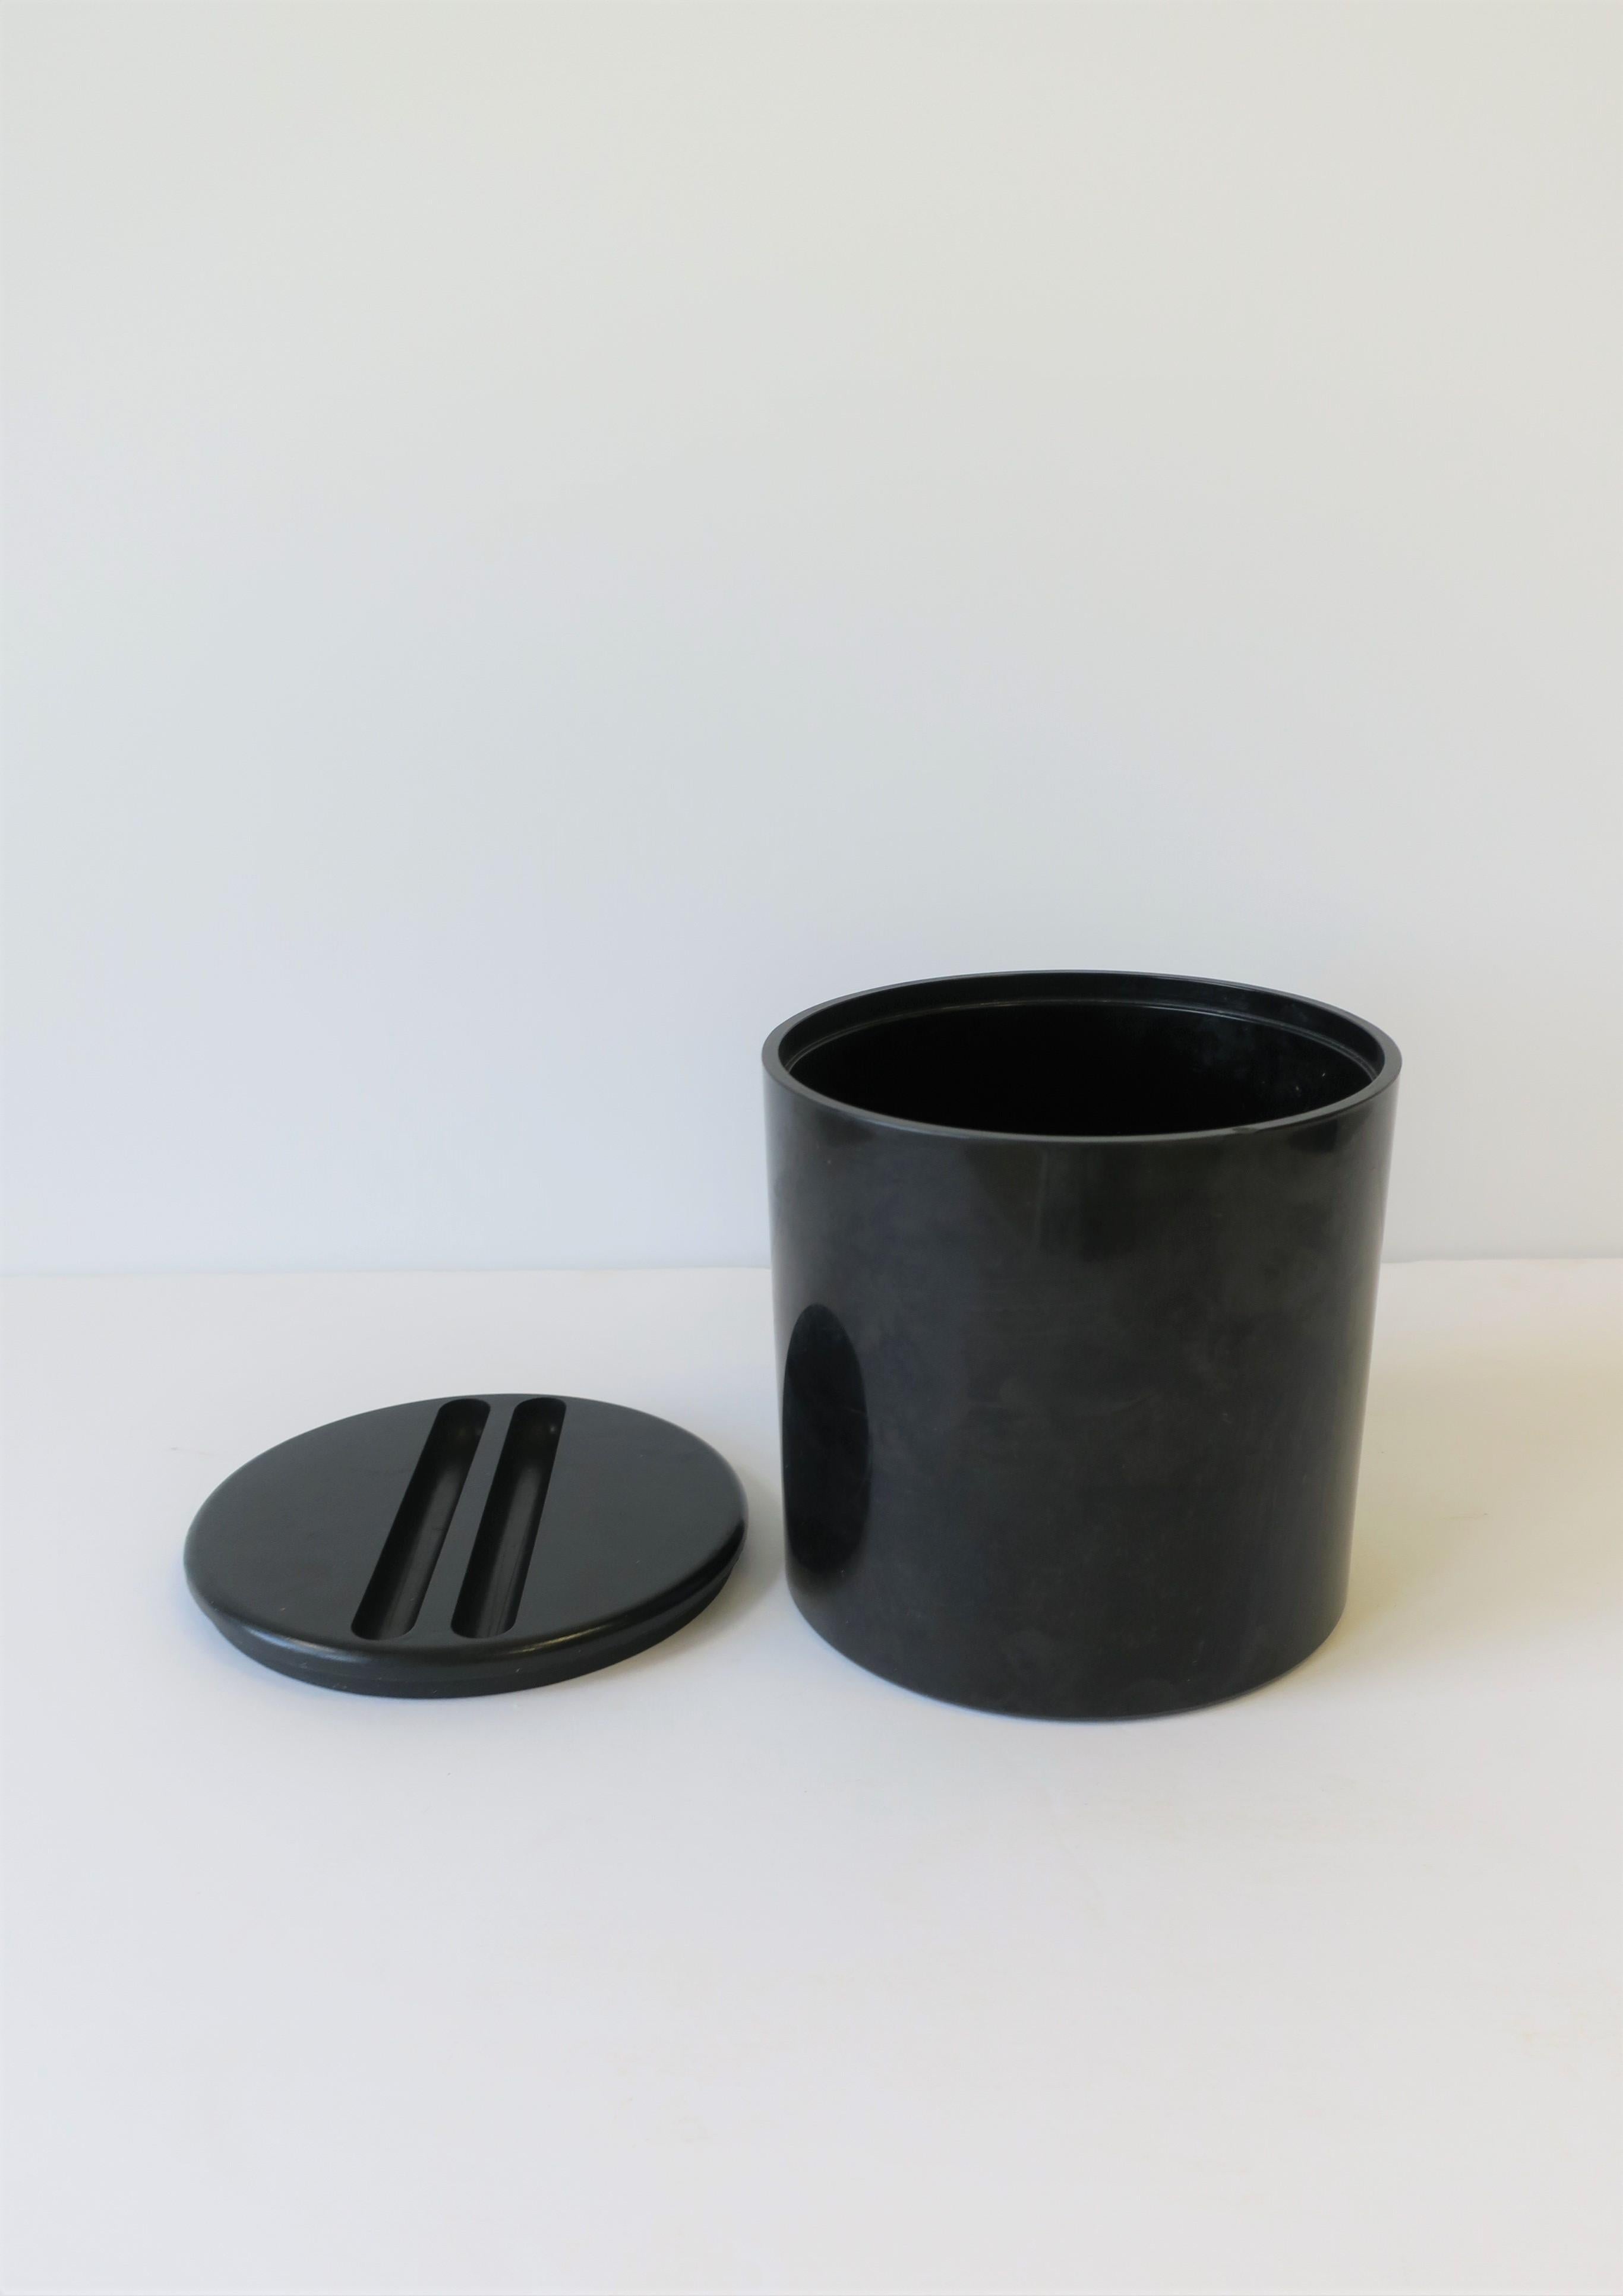 Gianfranco Frattini Italian Postmodern Black Box for Progetti  For Sale 1